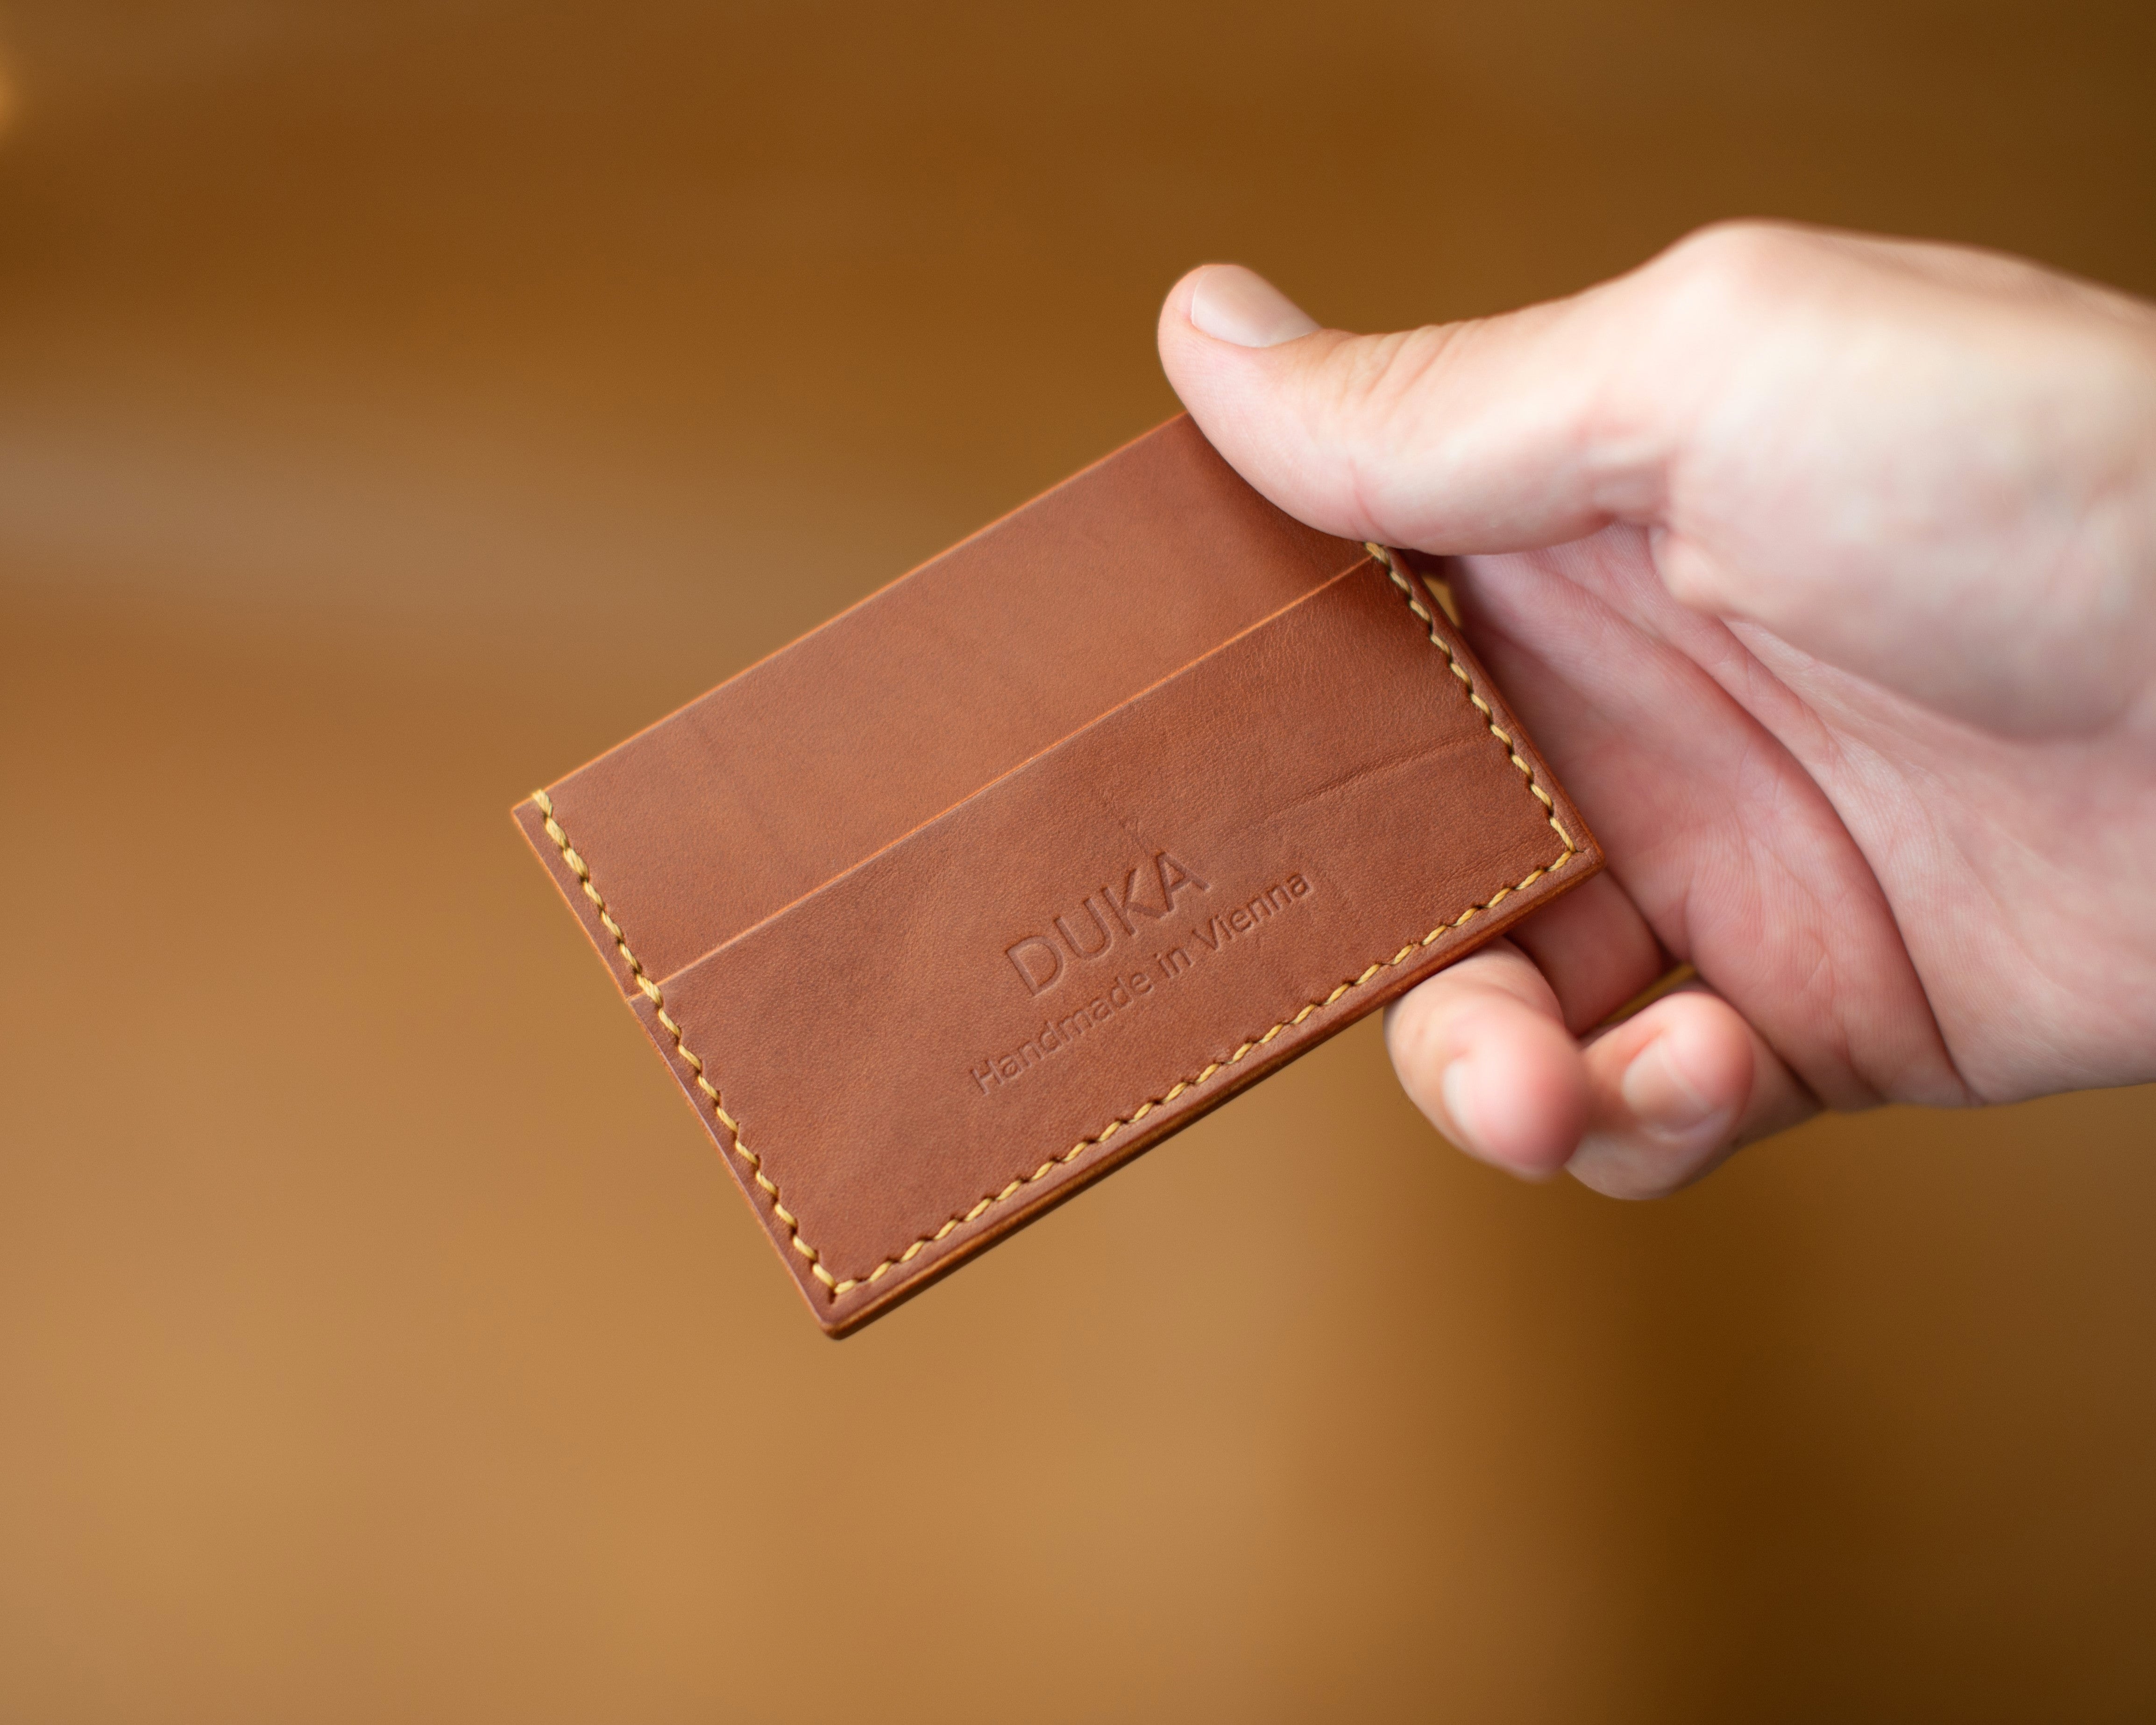 Personalized Cardholder, Leather Card Holder Wallet, Minimalist Wallet, Leather Card Holder,Leather Slim Card Wallet, Gift for Him, Handmade